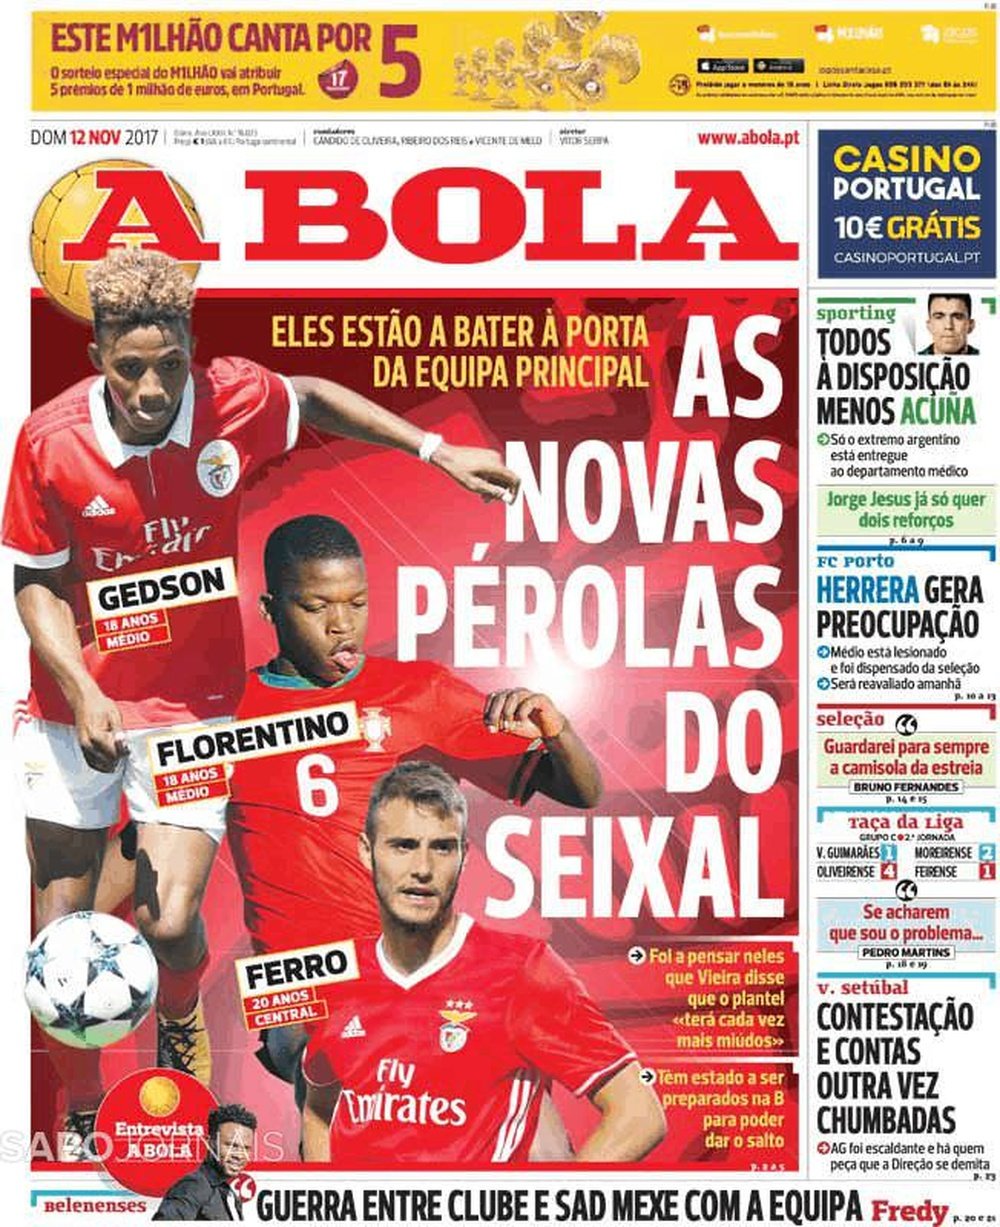 Capa do jornal 'A Bola', 12/11/2017. BeSoccer